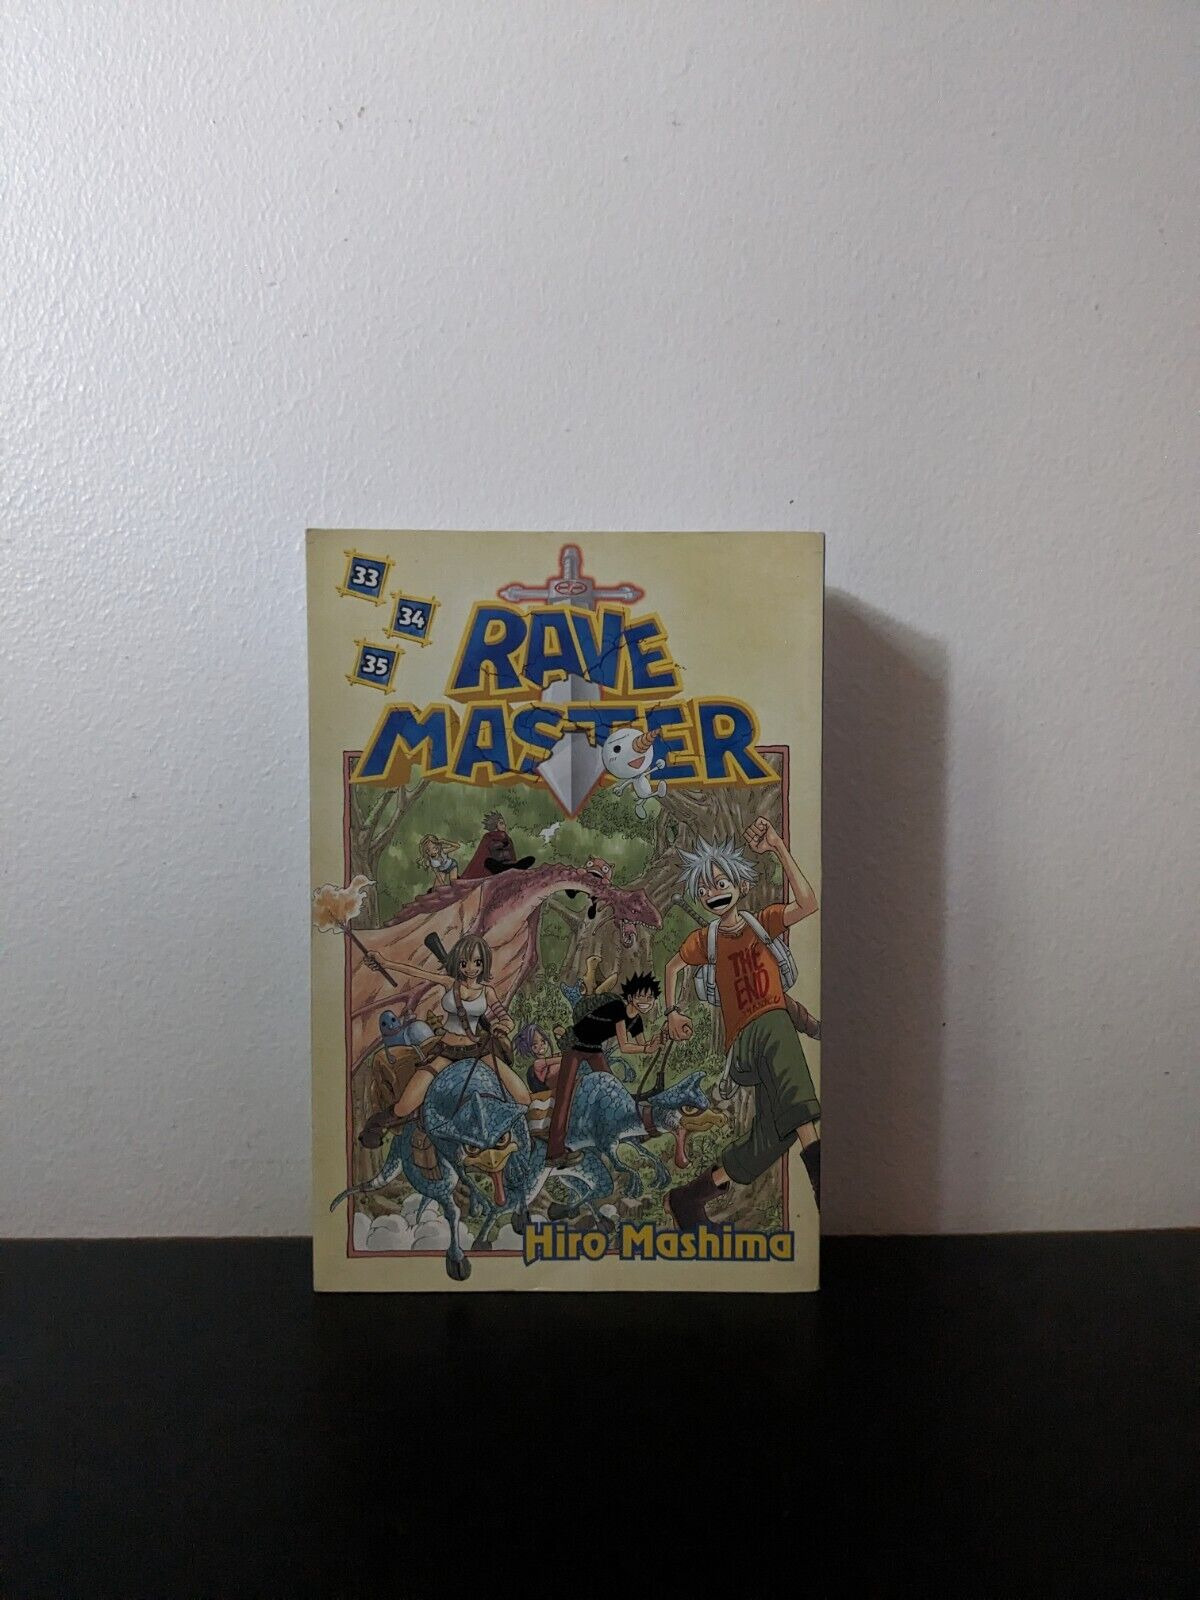 Rave Master Vol 33 34 35 by Hiro Mashima English Manga Kodansha Comics